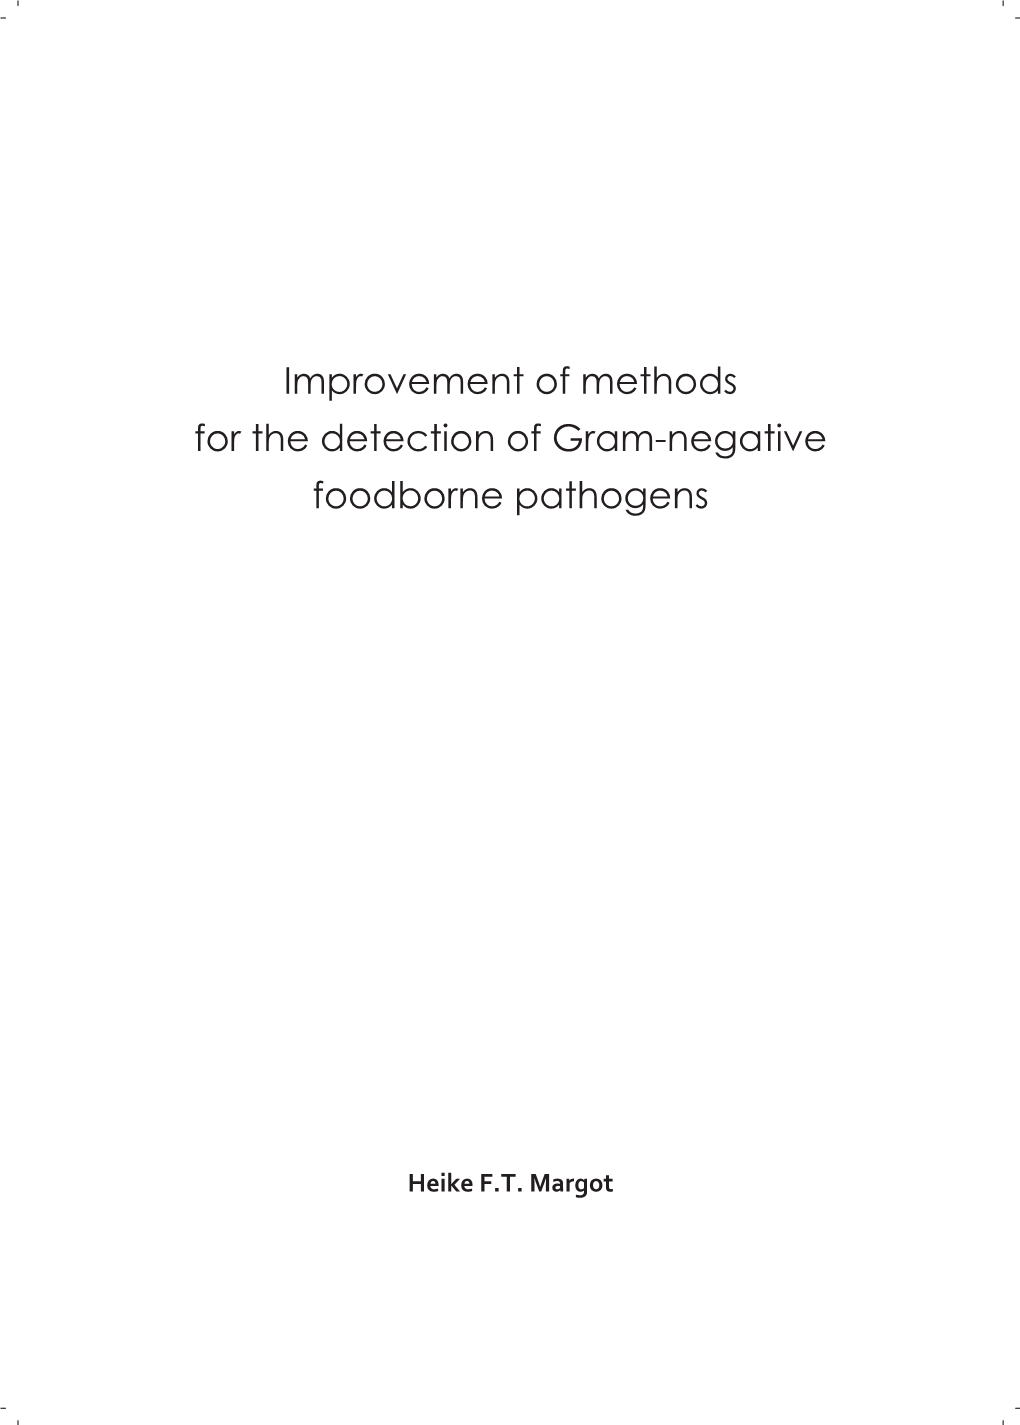 Improvement of Methods for the Detection of Gram-Negative Foodborne Pathogens